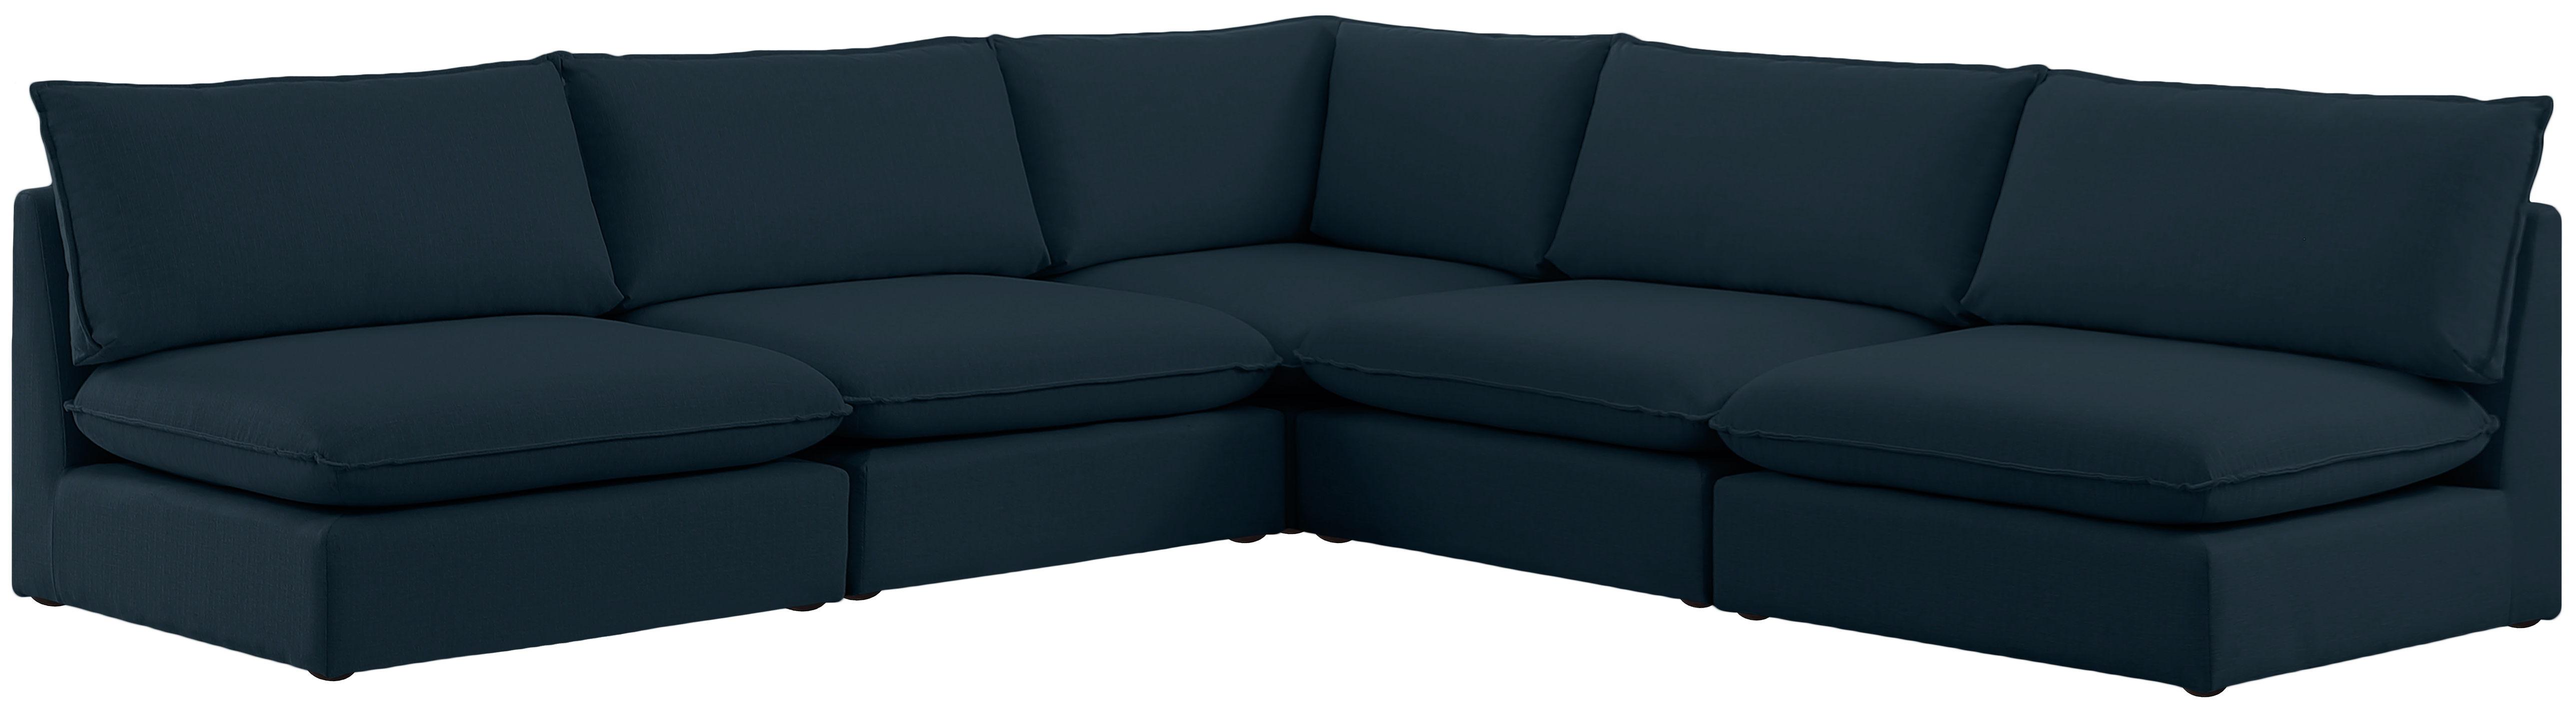 Meridian Furniture - Mackenzie - Modular Sectional 5 Piece - Navy - 5th Avenue Furniture